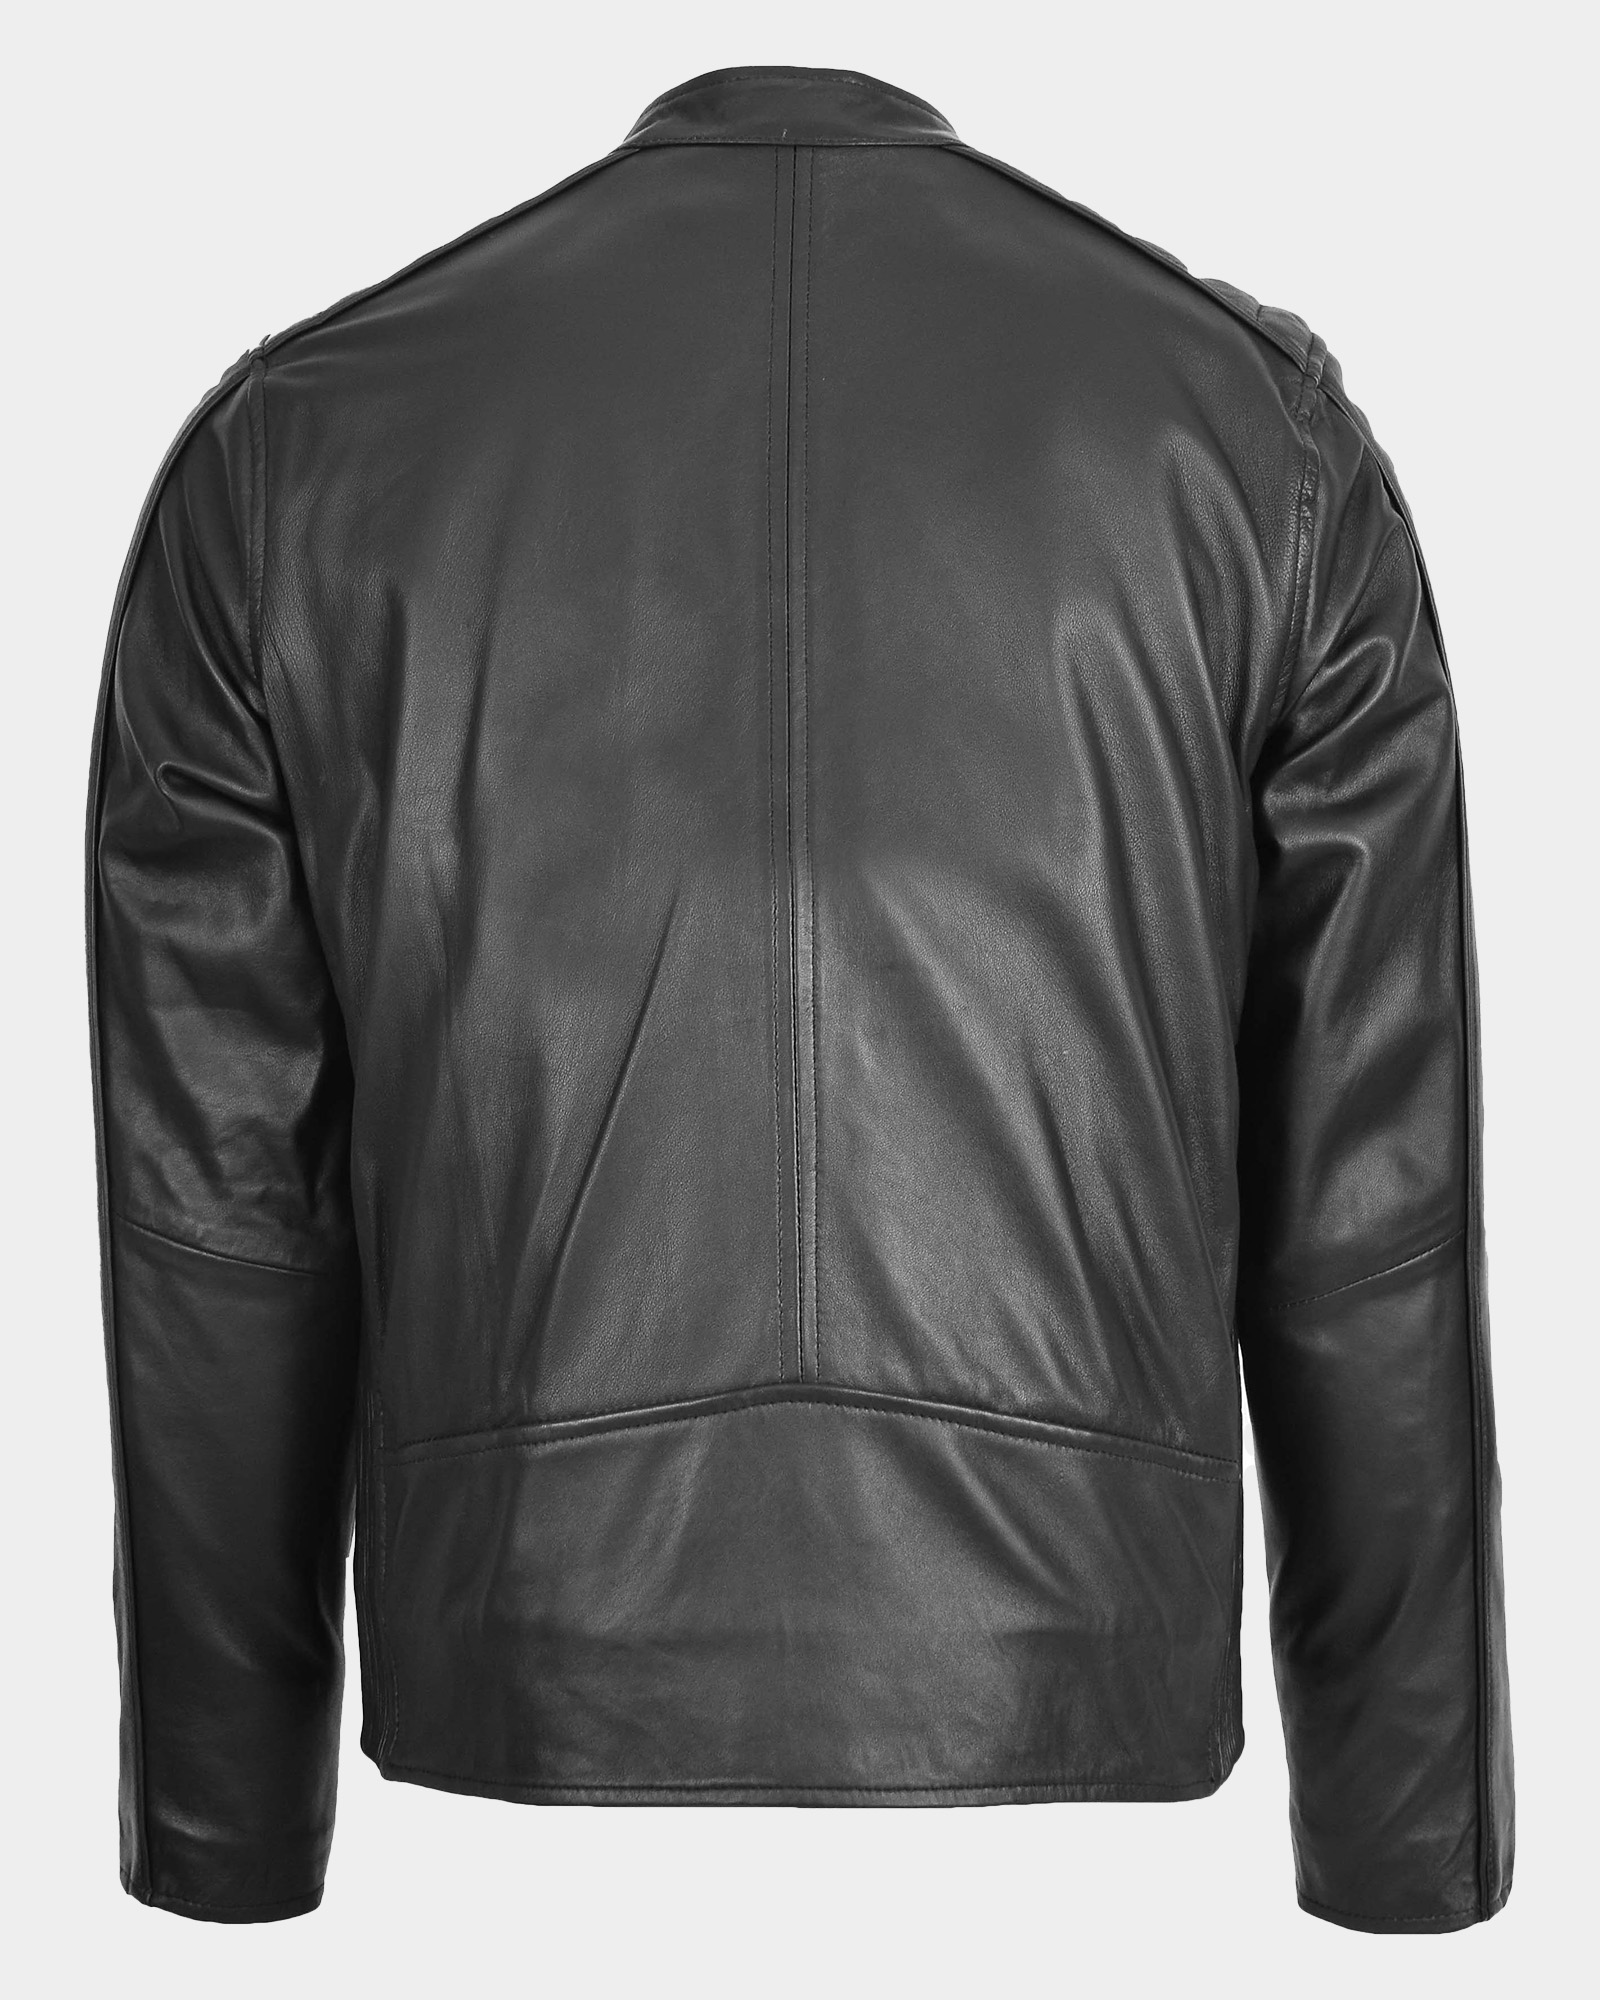 Mens Leather Casual Biker Fashion Jacket Nova Black